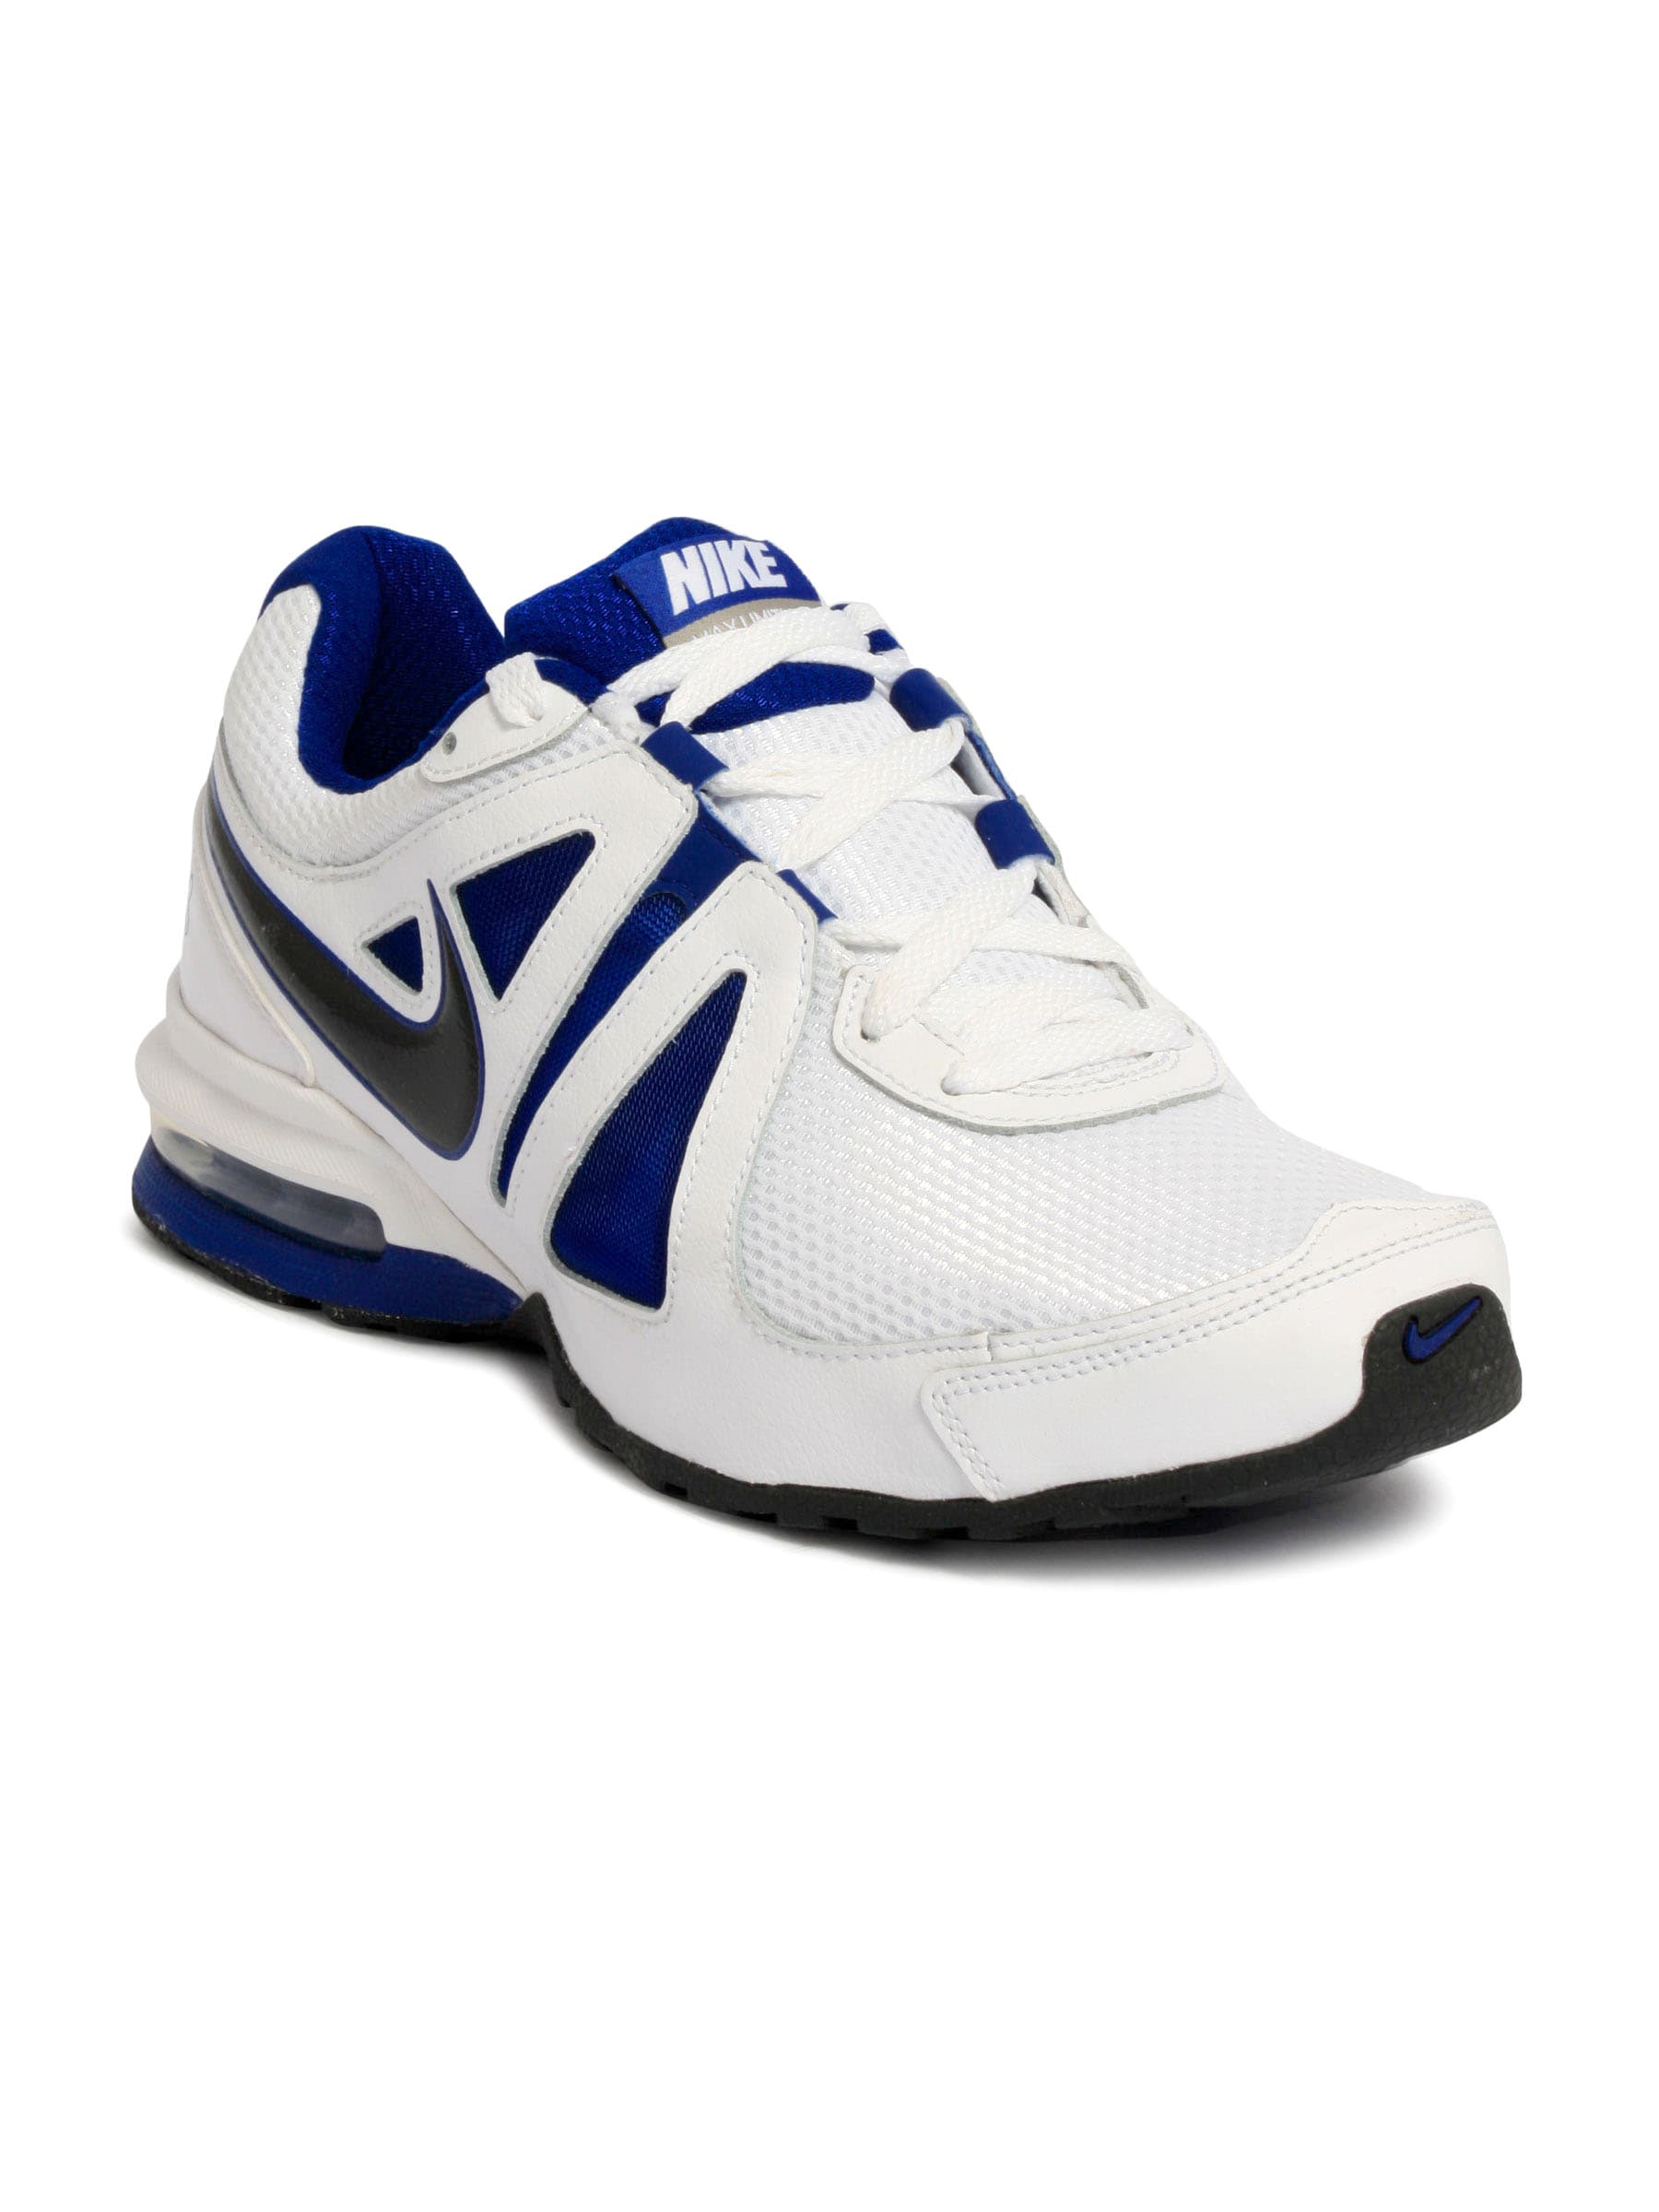 Nike Men Air Max Limitless White Sports Shoes